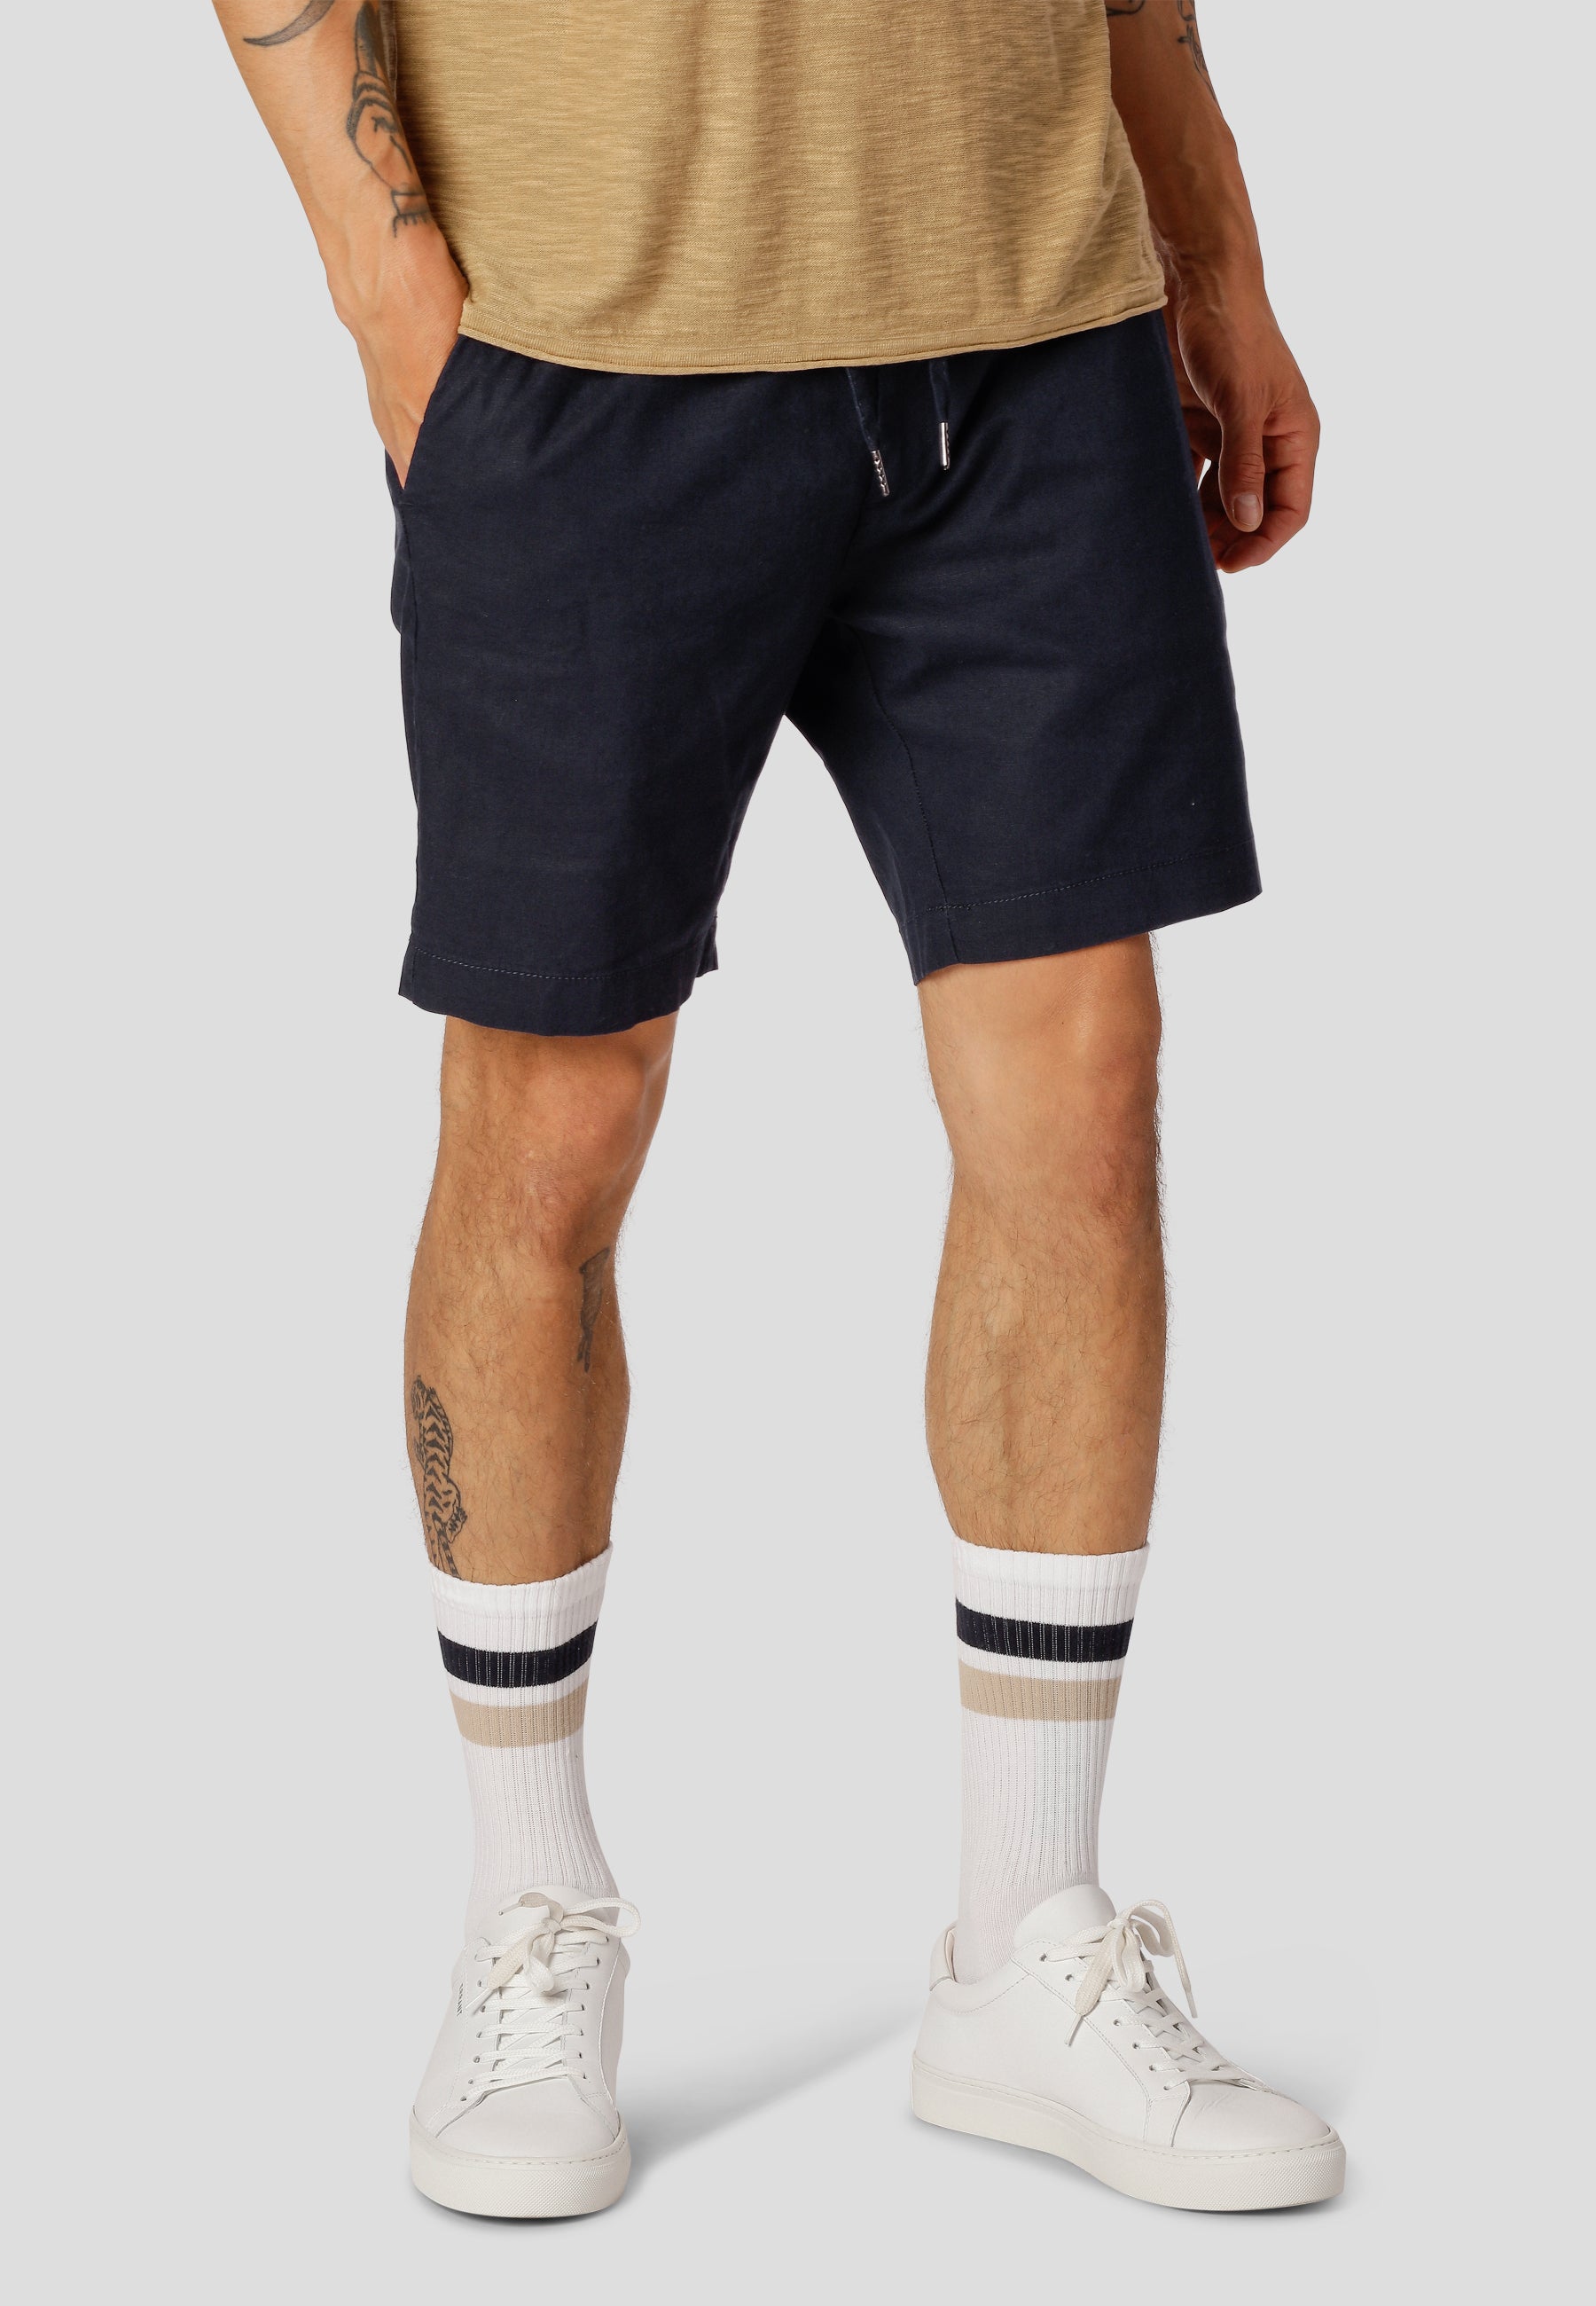 Barcelona Cotton / Linen Shorts - Navy